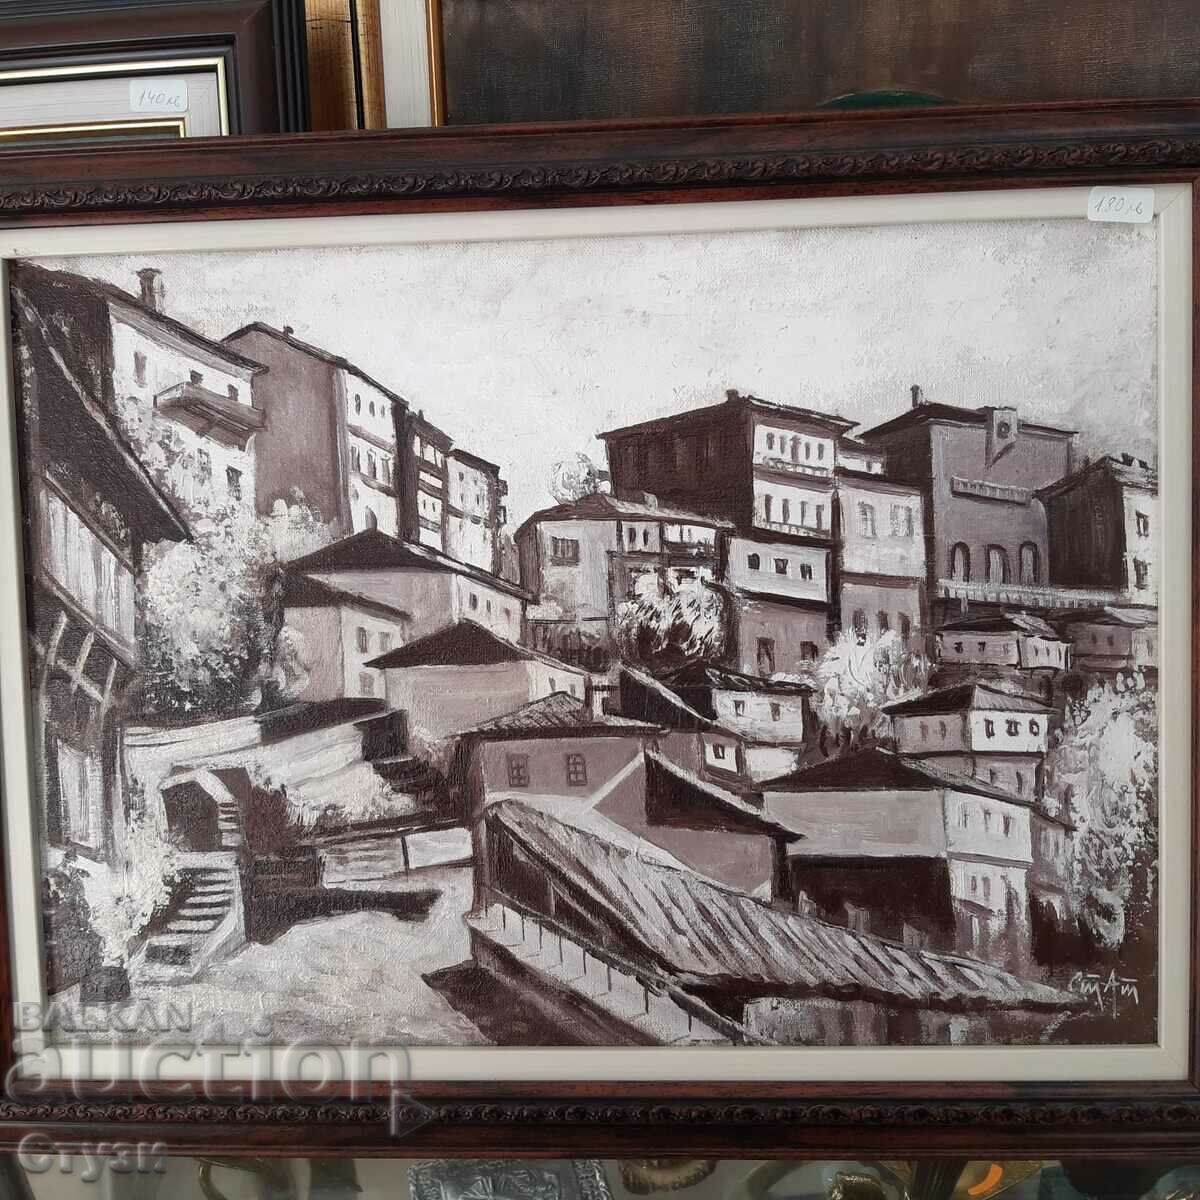 Tablou de Stefan Atanasov "V. Tarnovo", ulei, 31 x 43 cm